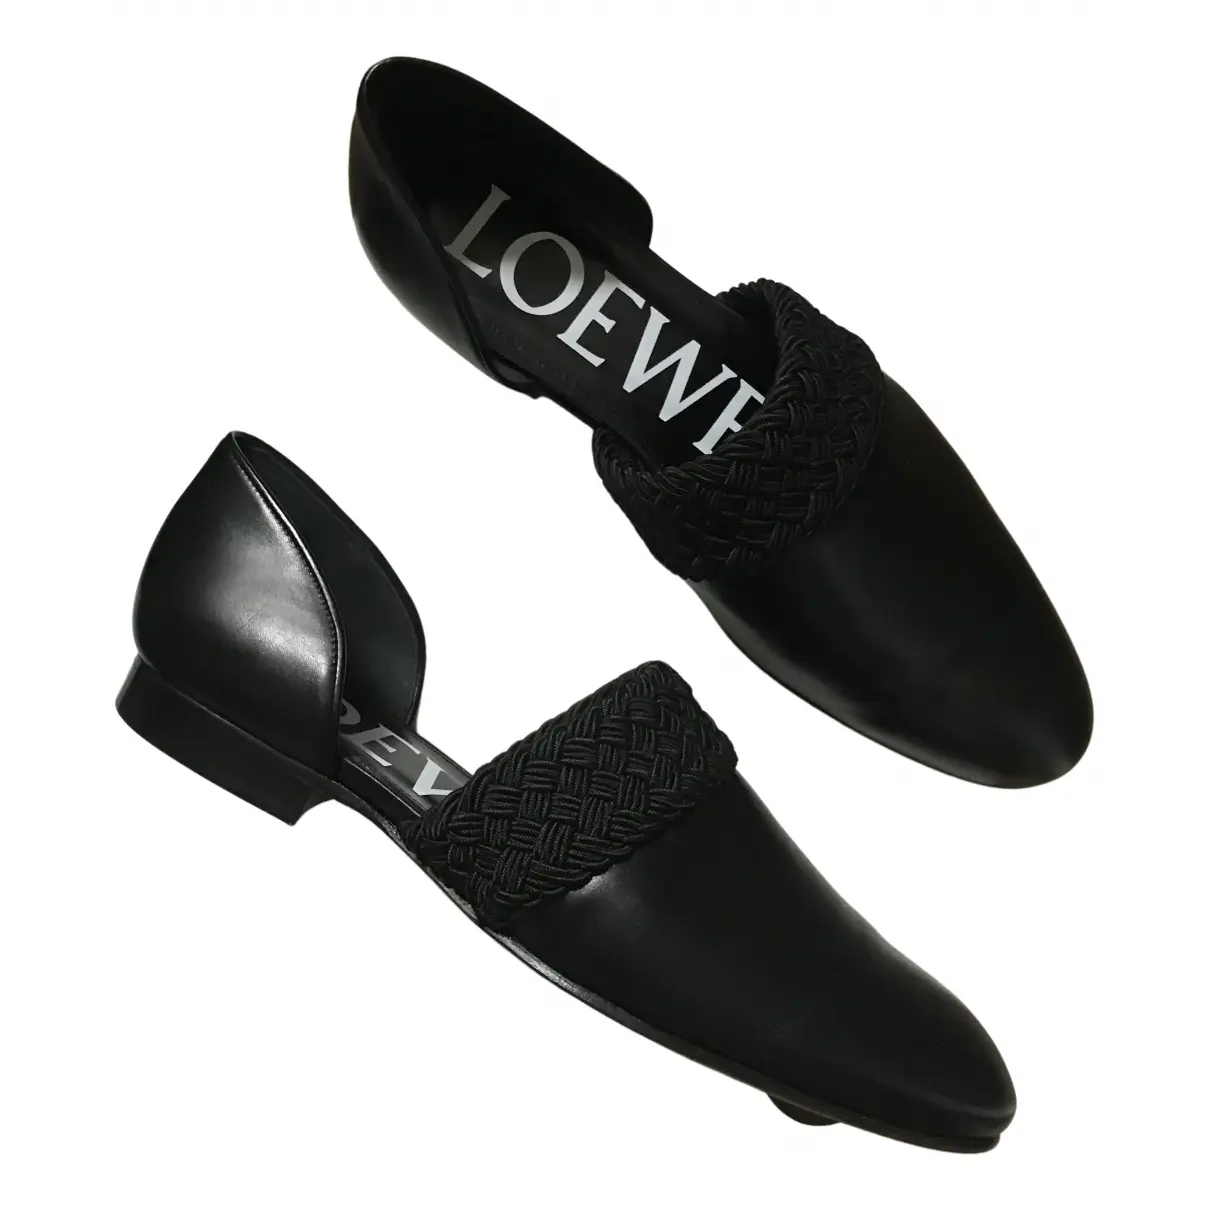 Leather sandals Loewe